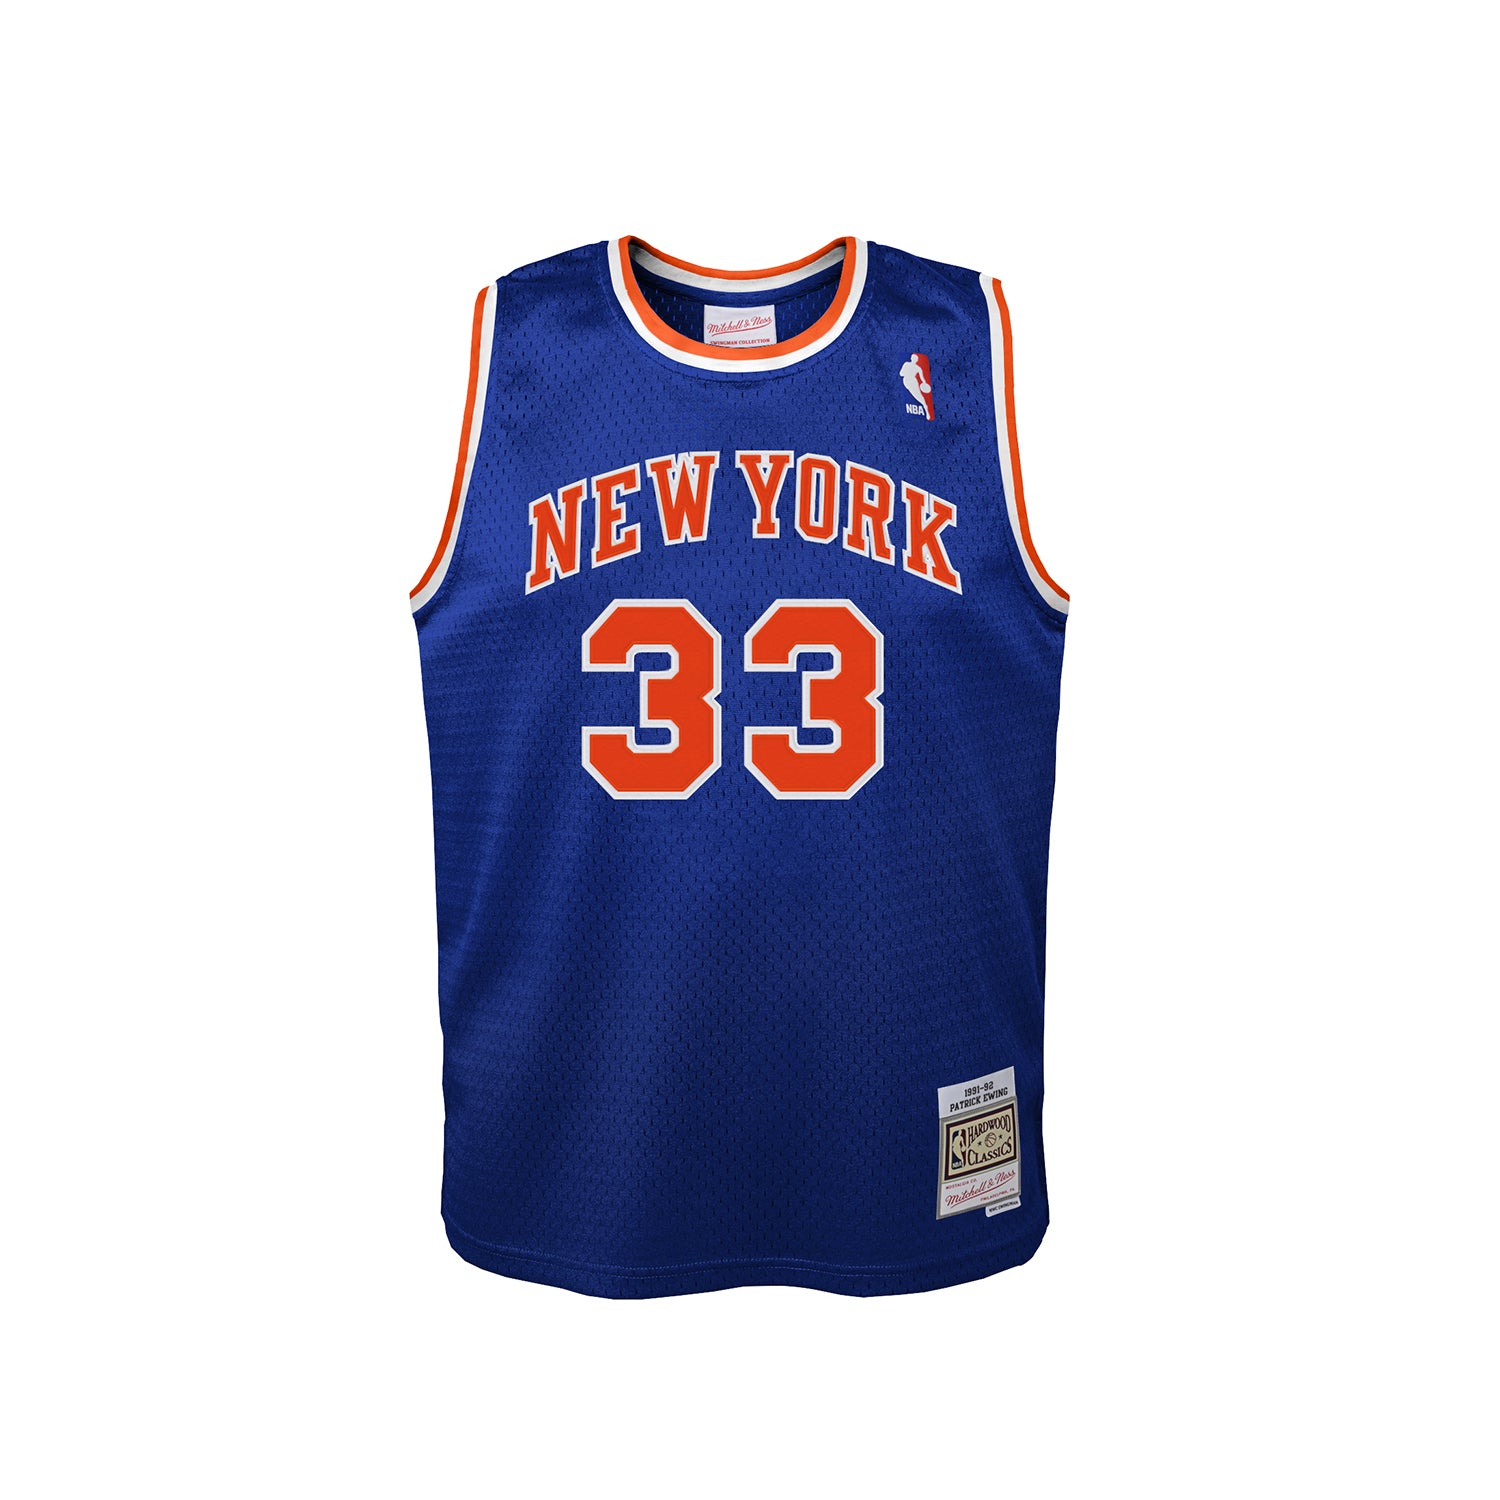 Patrick Ewing Autographed New York Mitchell & Ness Blue Basketball Jersey (Large) - BAS